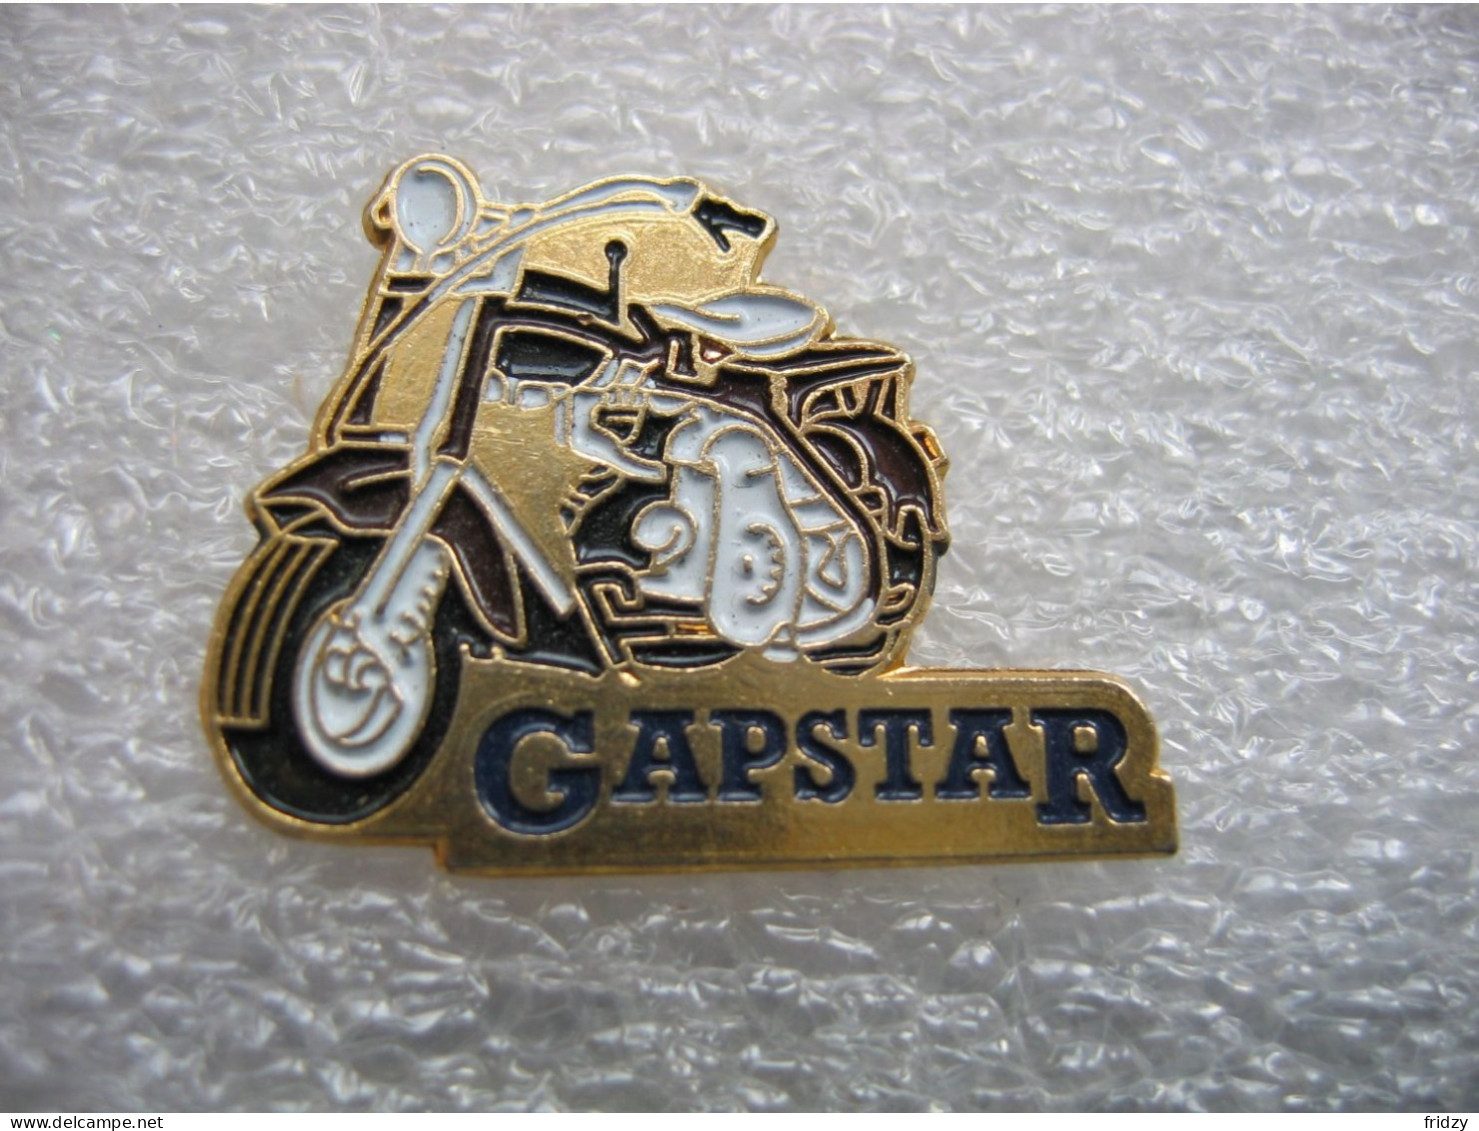 Pin's Moto Pour La Pub GAPSTAR - Motorräder